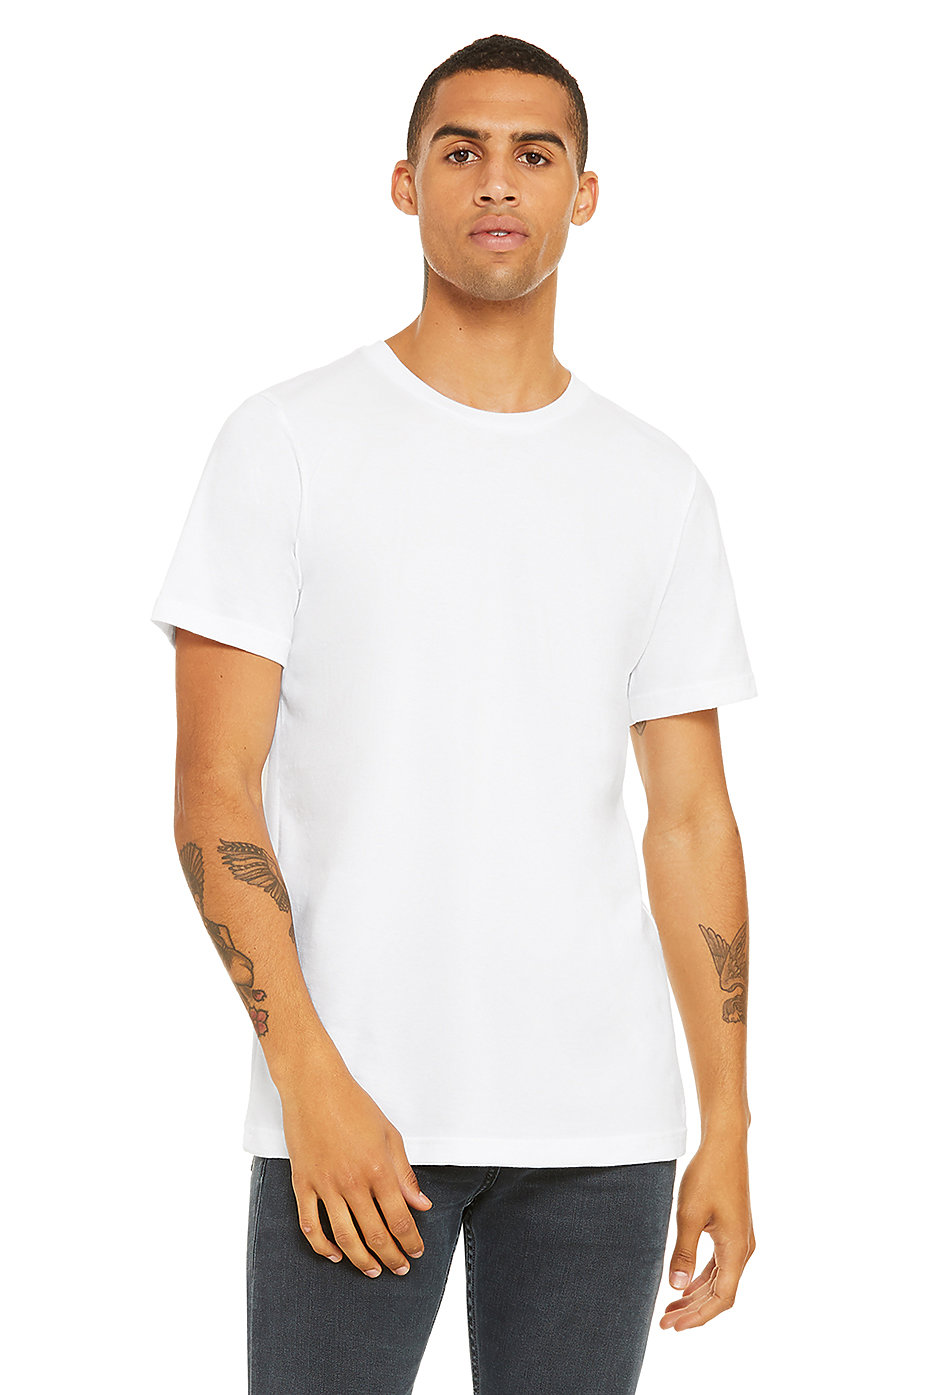 Bella Canvas Unisex Poly-Cotton Short-Sleeve T-Shirt 